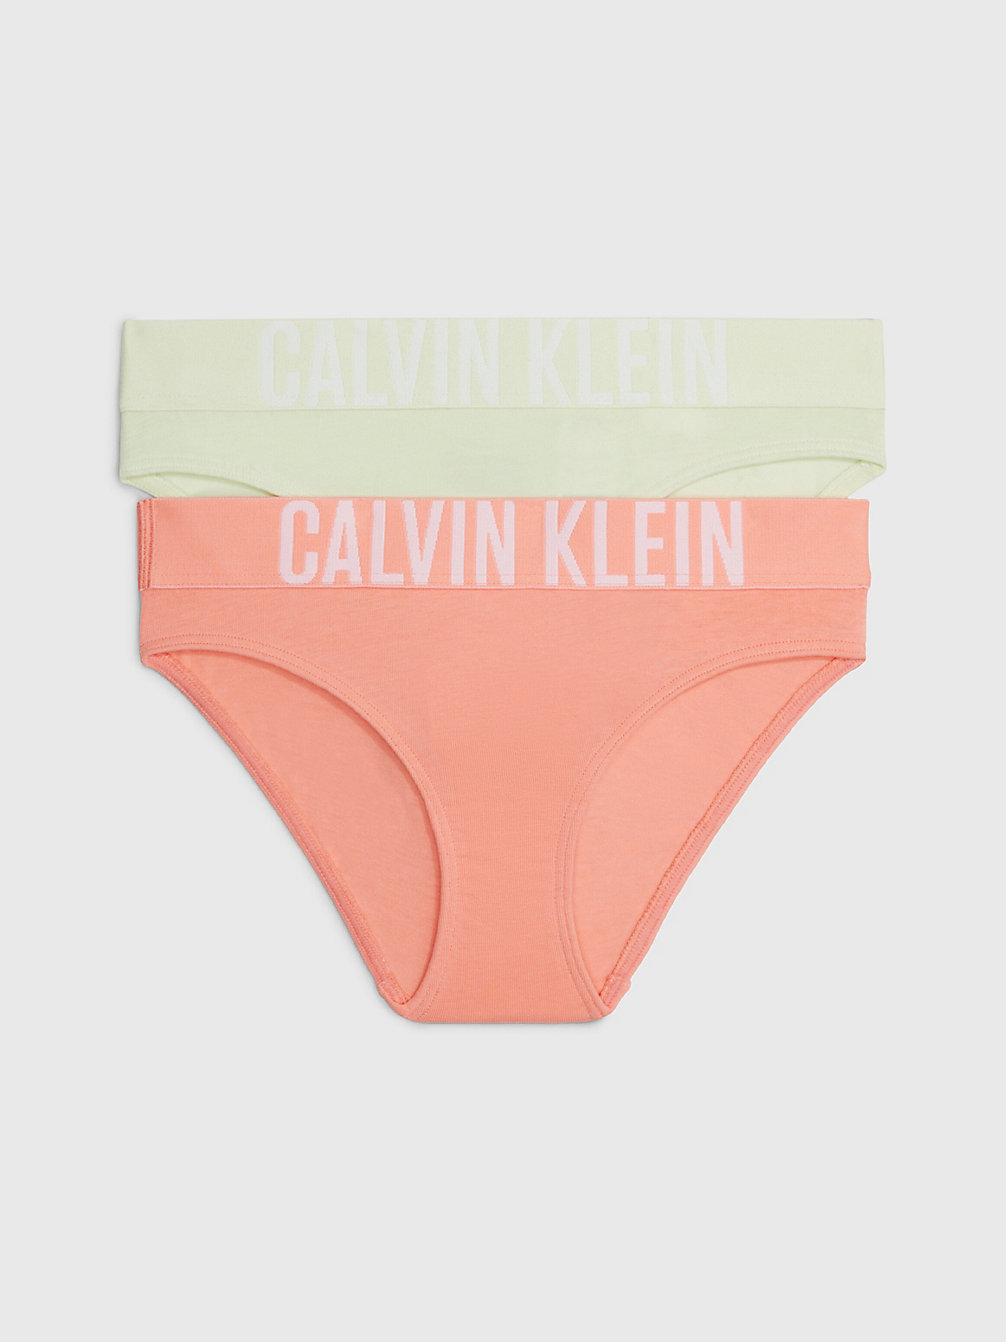 LEMONGRASS/PEACHFLORAL 2 Pack Girls Bikini Briefs - Intense Power undefined girls Calvin Klein